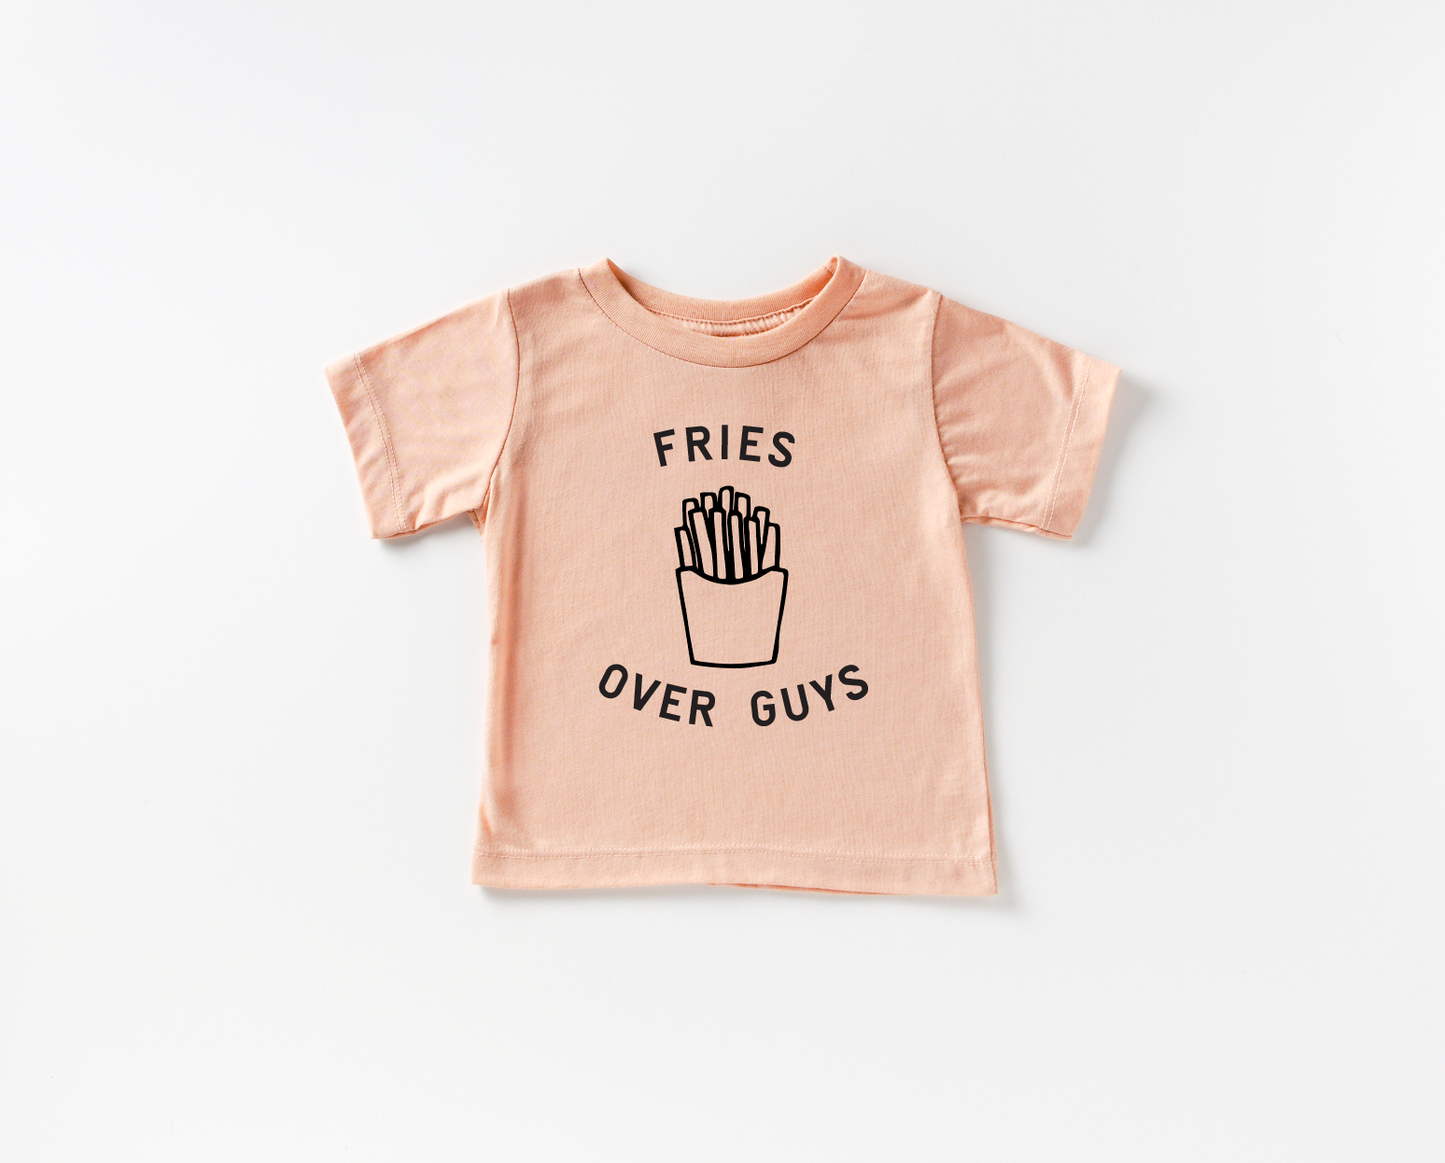 Fries Over Guys Tee